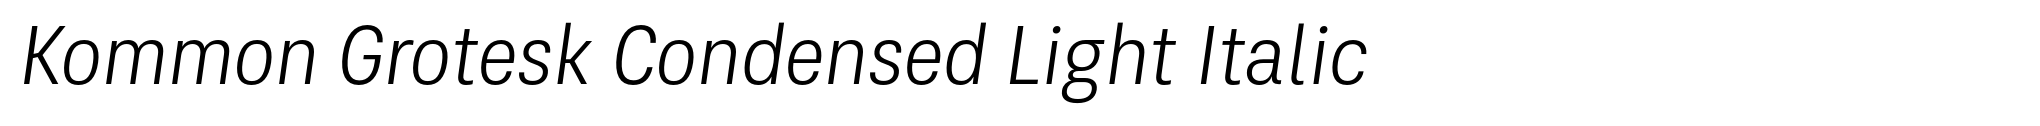 Kommon Grotesk Condensed Light Italic image